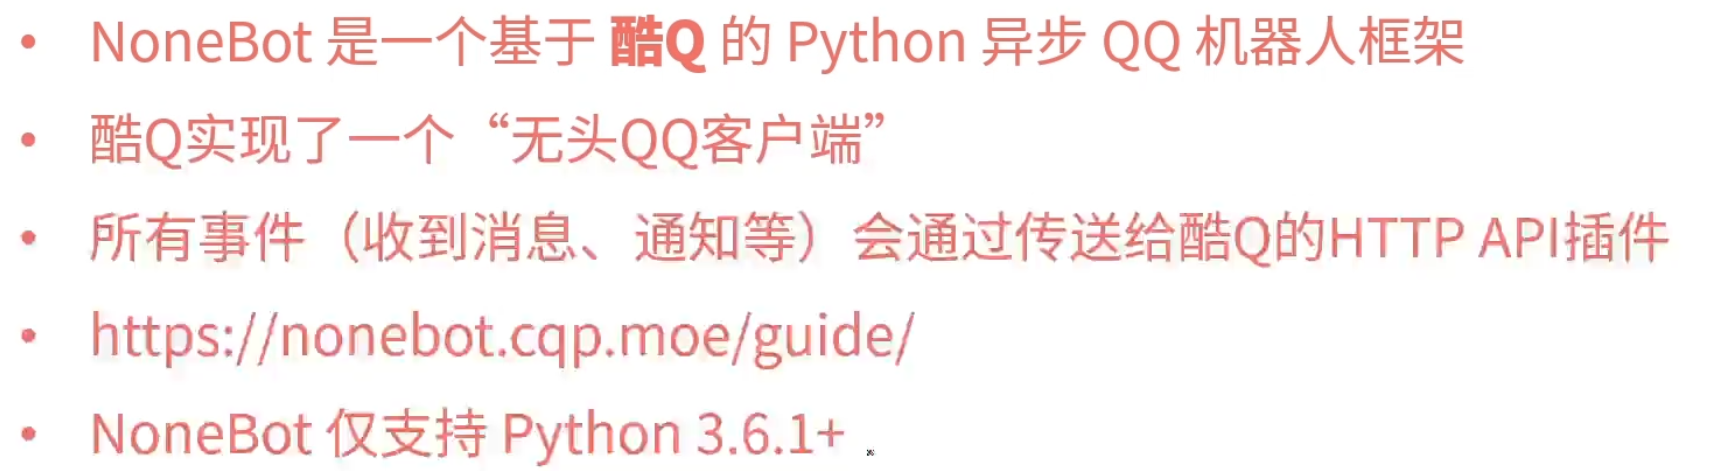 Python操作qq-NoneBot - 图1